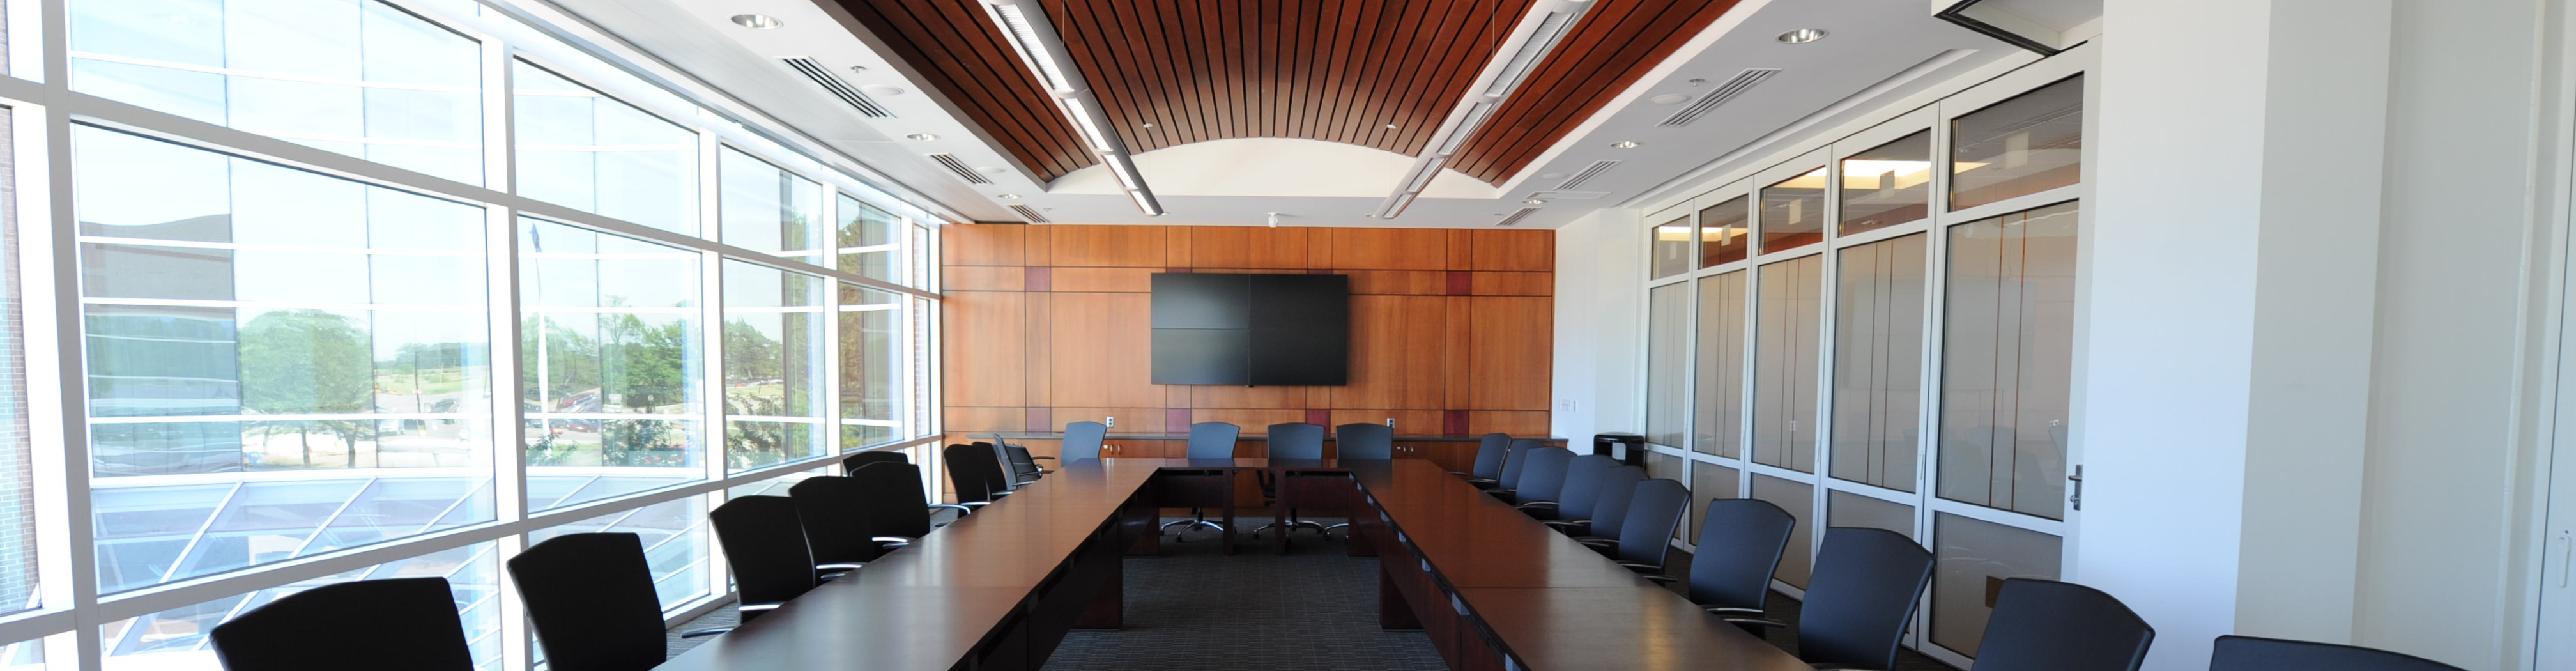 SVSU Executive Board Room